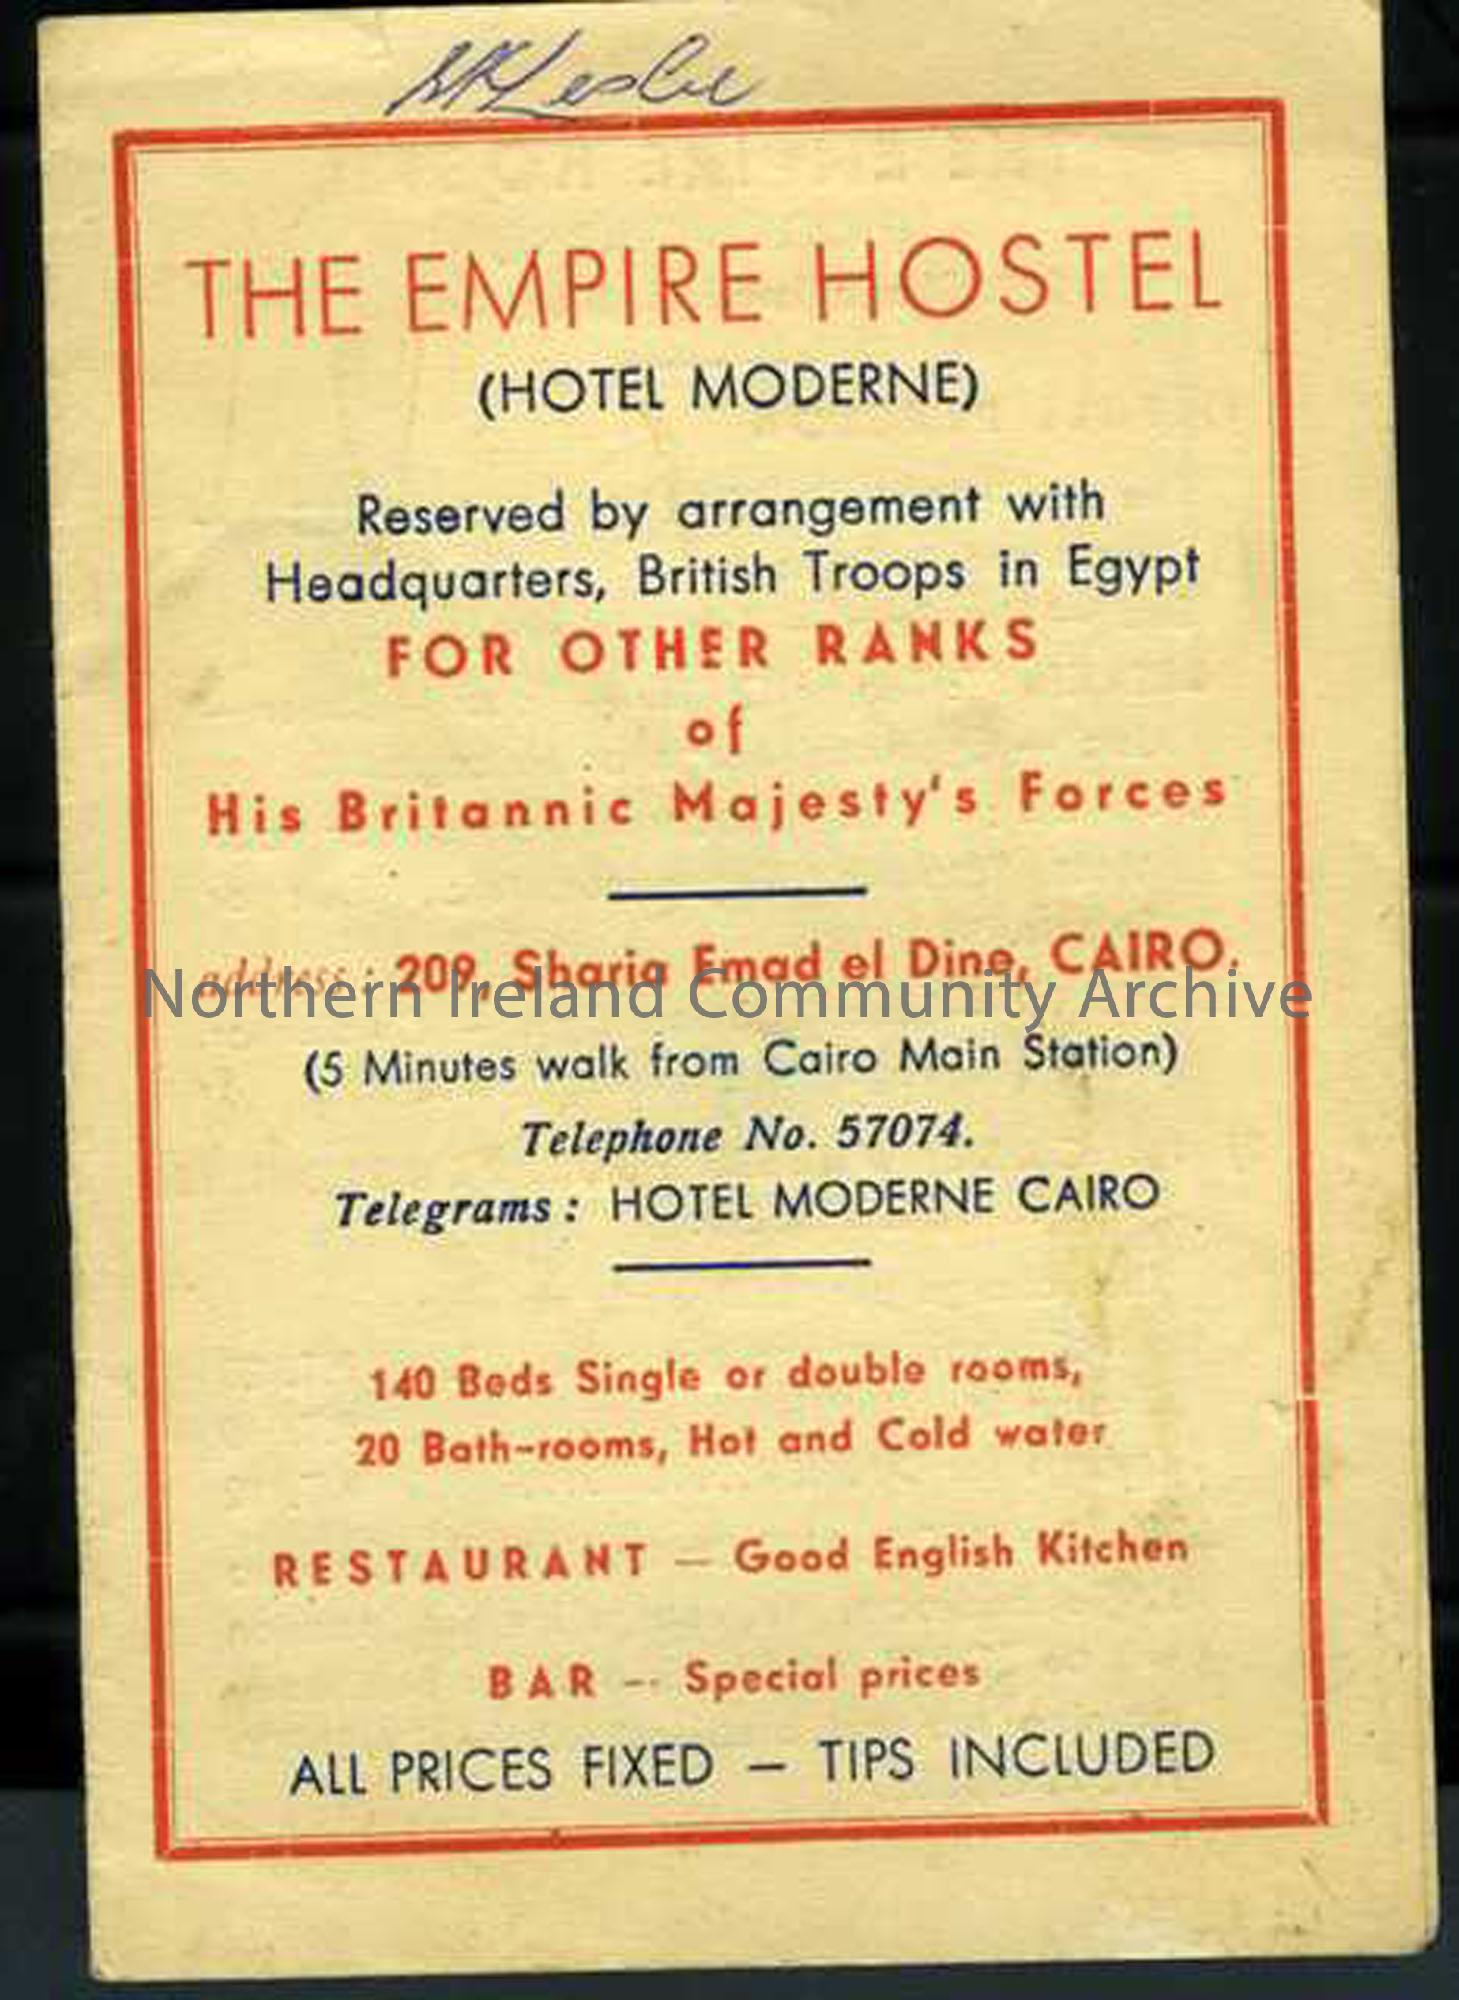 Empire Hostel advertisement card